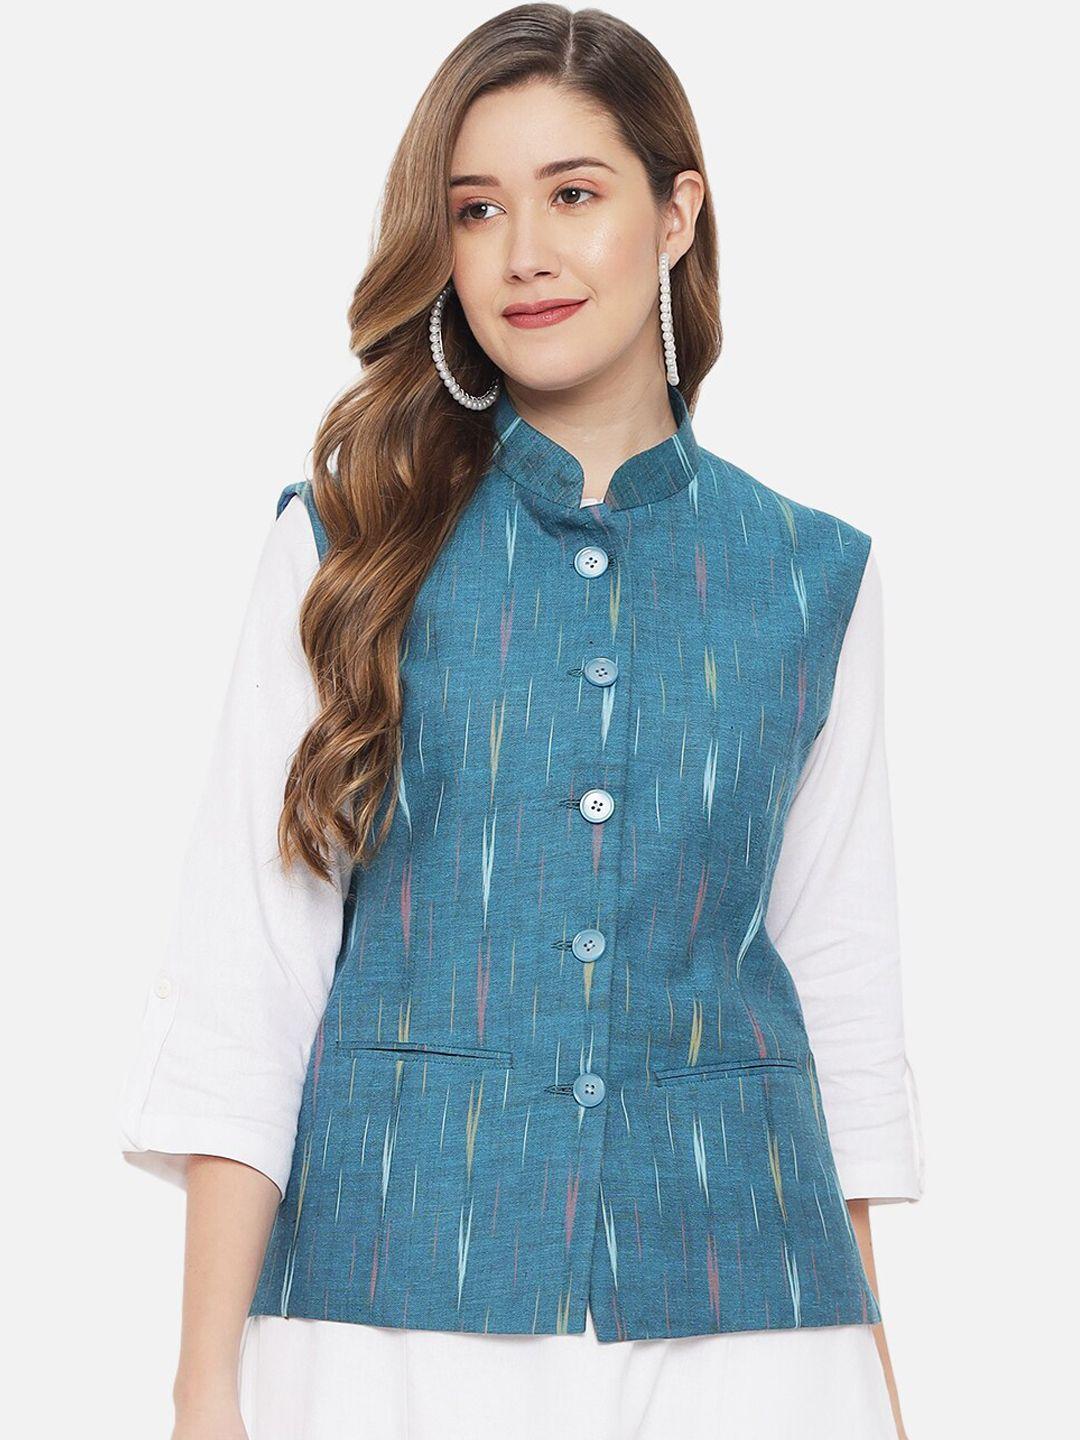 vastraa fusion women teal blue & white ikat printed pure cotton woven nehru jacket